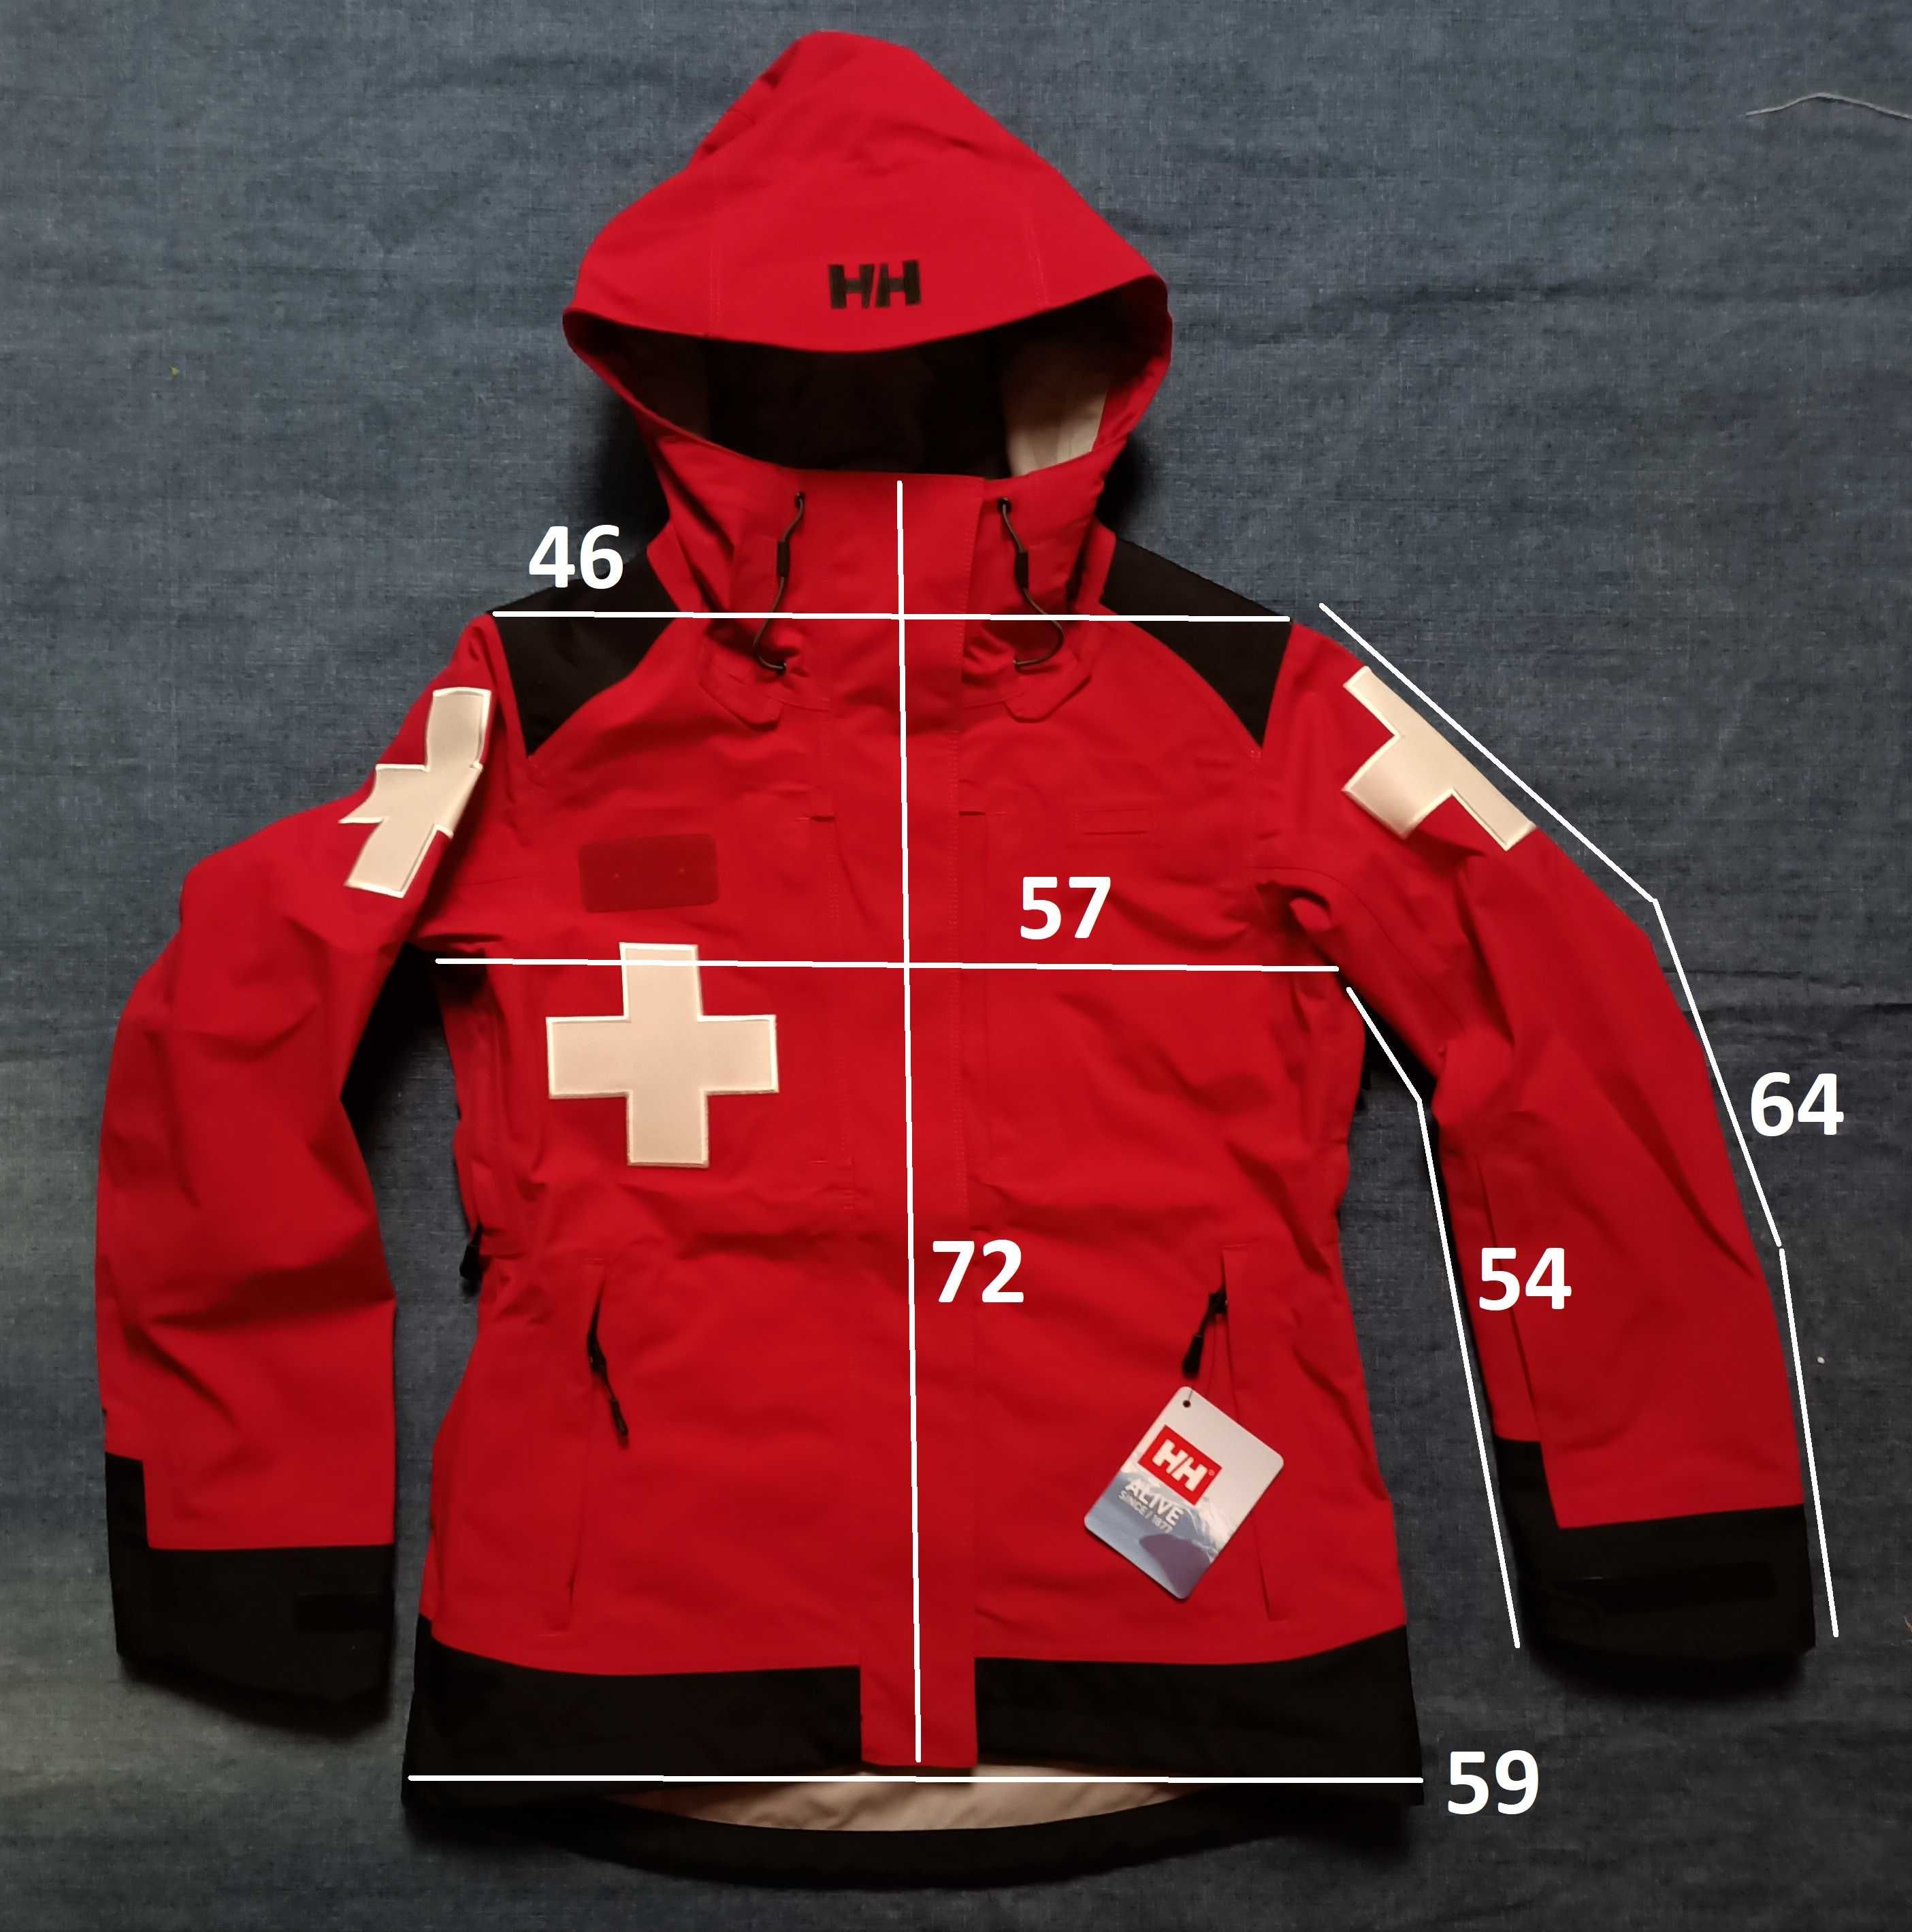 Kurtka wodoodporna Helly Hansen W'S Patrol Jacket Red rozmiar L - new